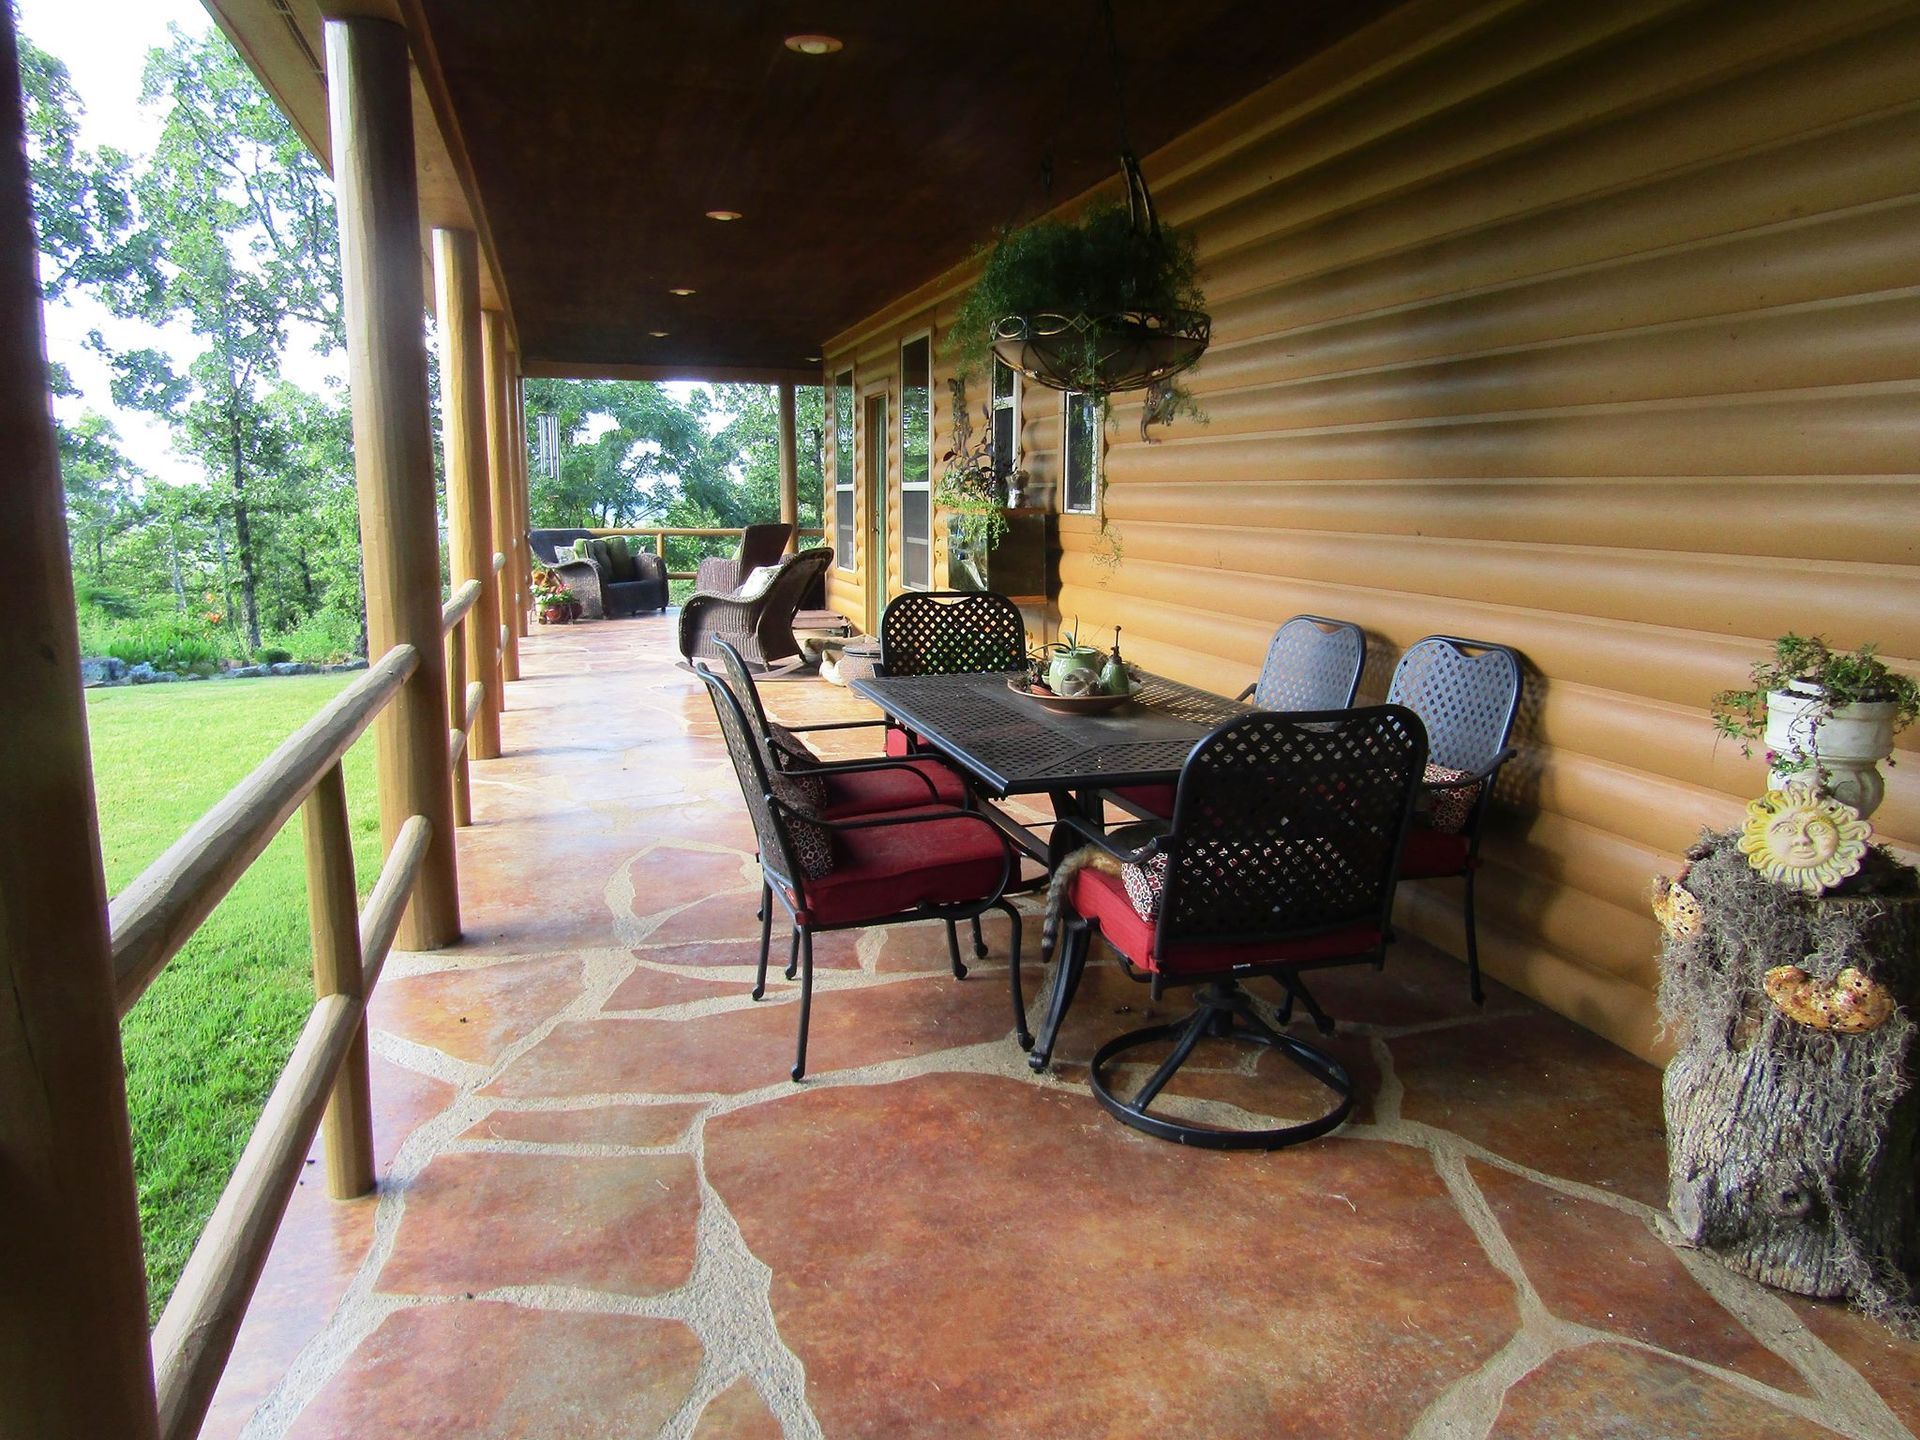 A balcony room - North Little Rock, AR - Starlight Ridge Woodland Retreat